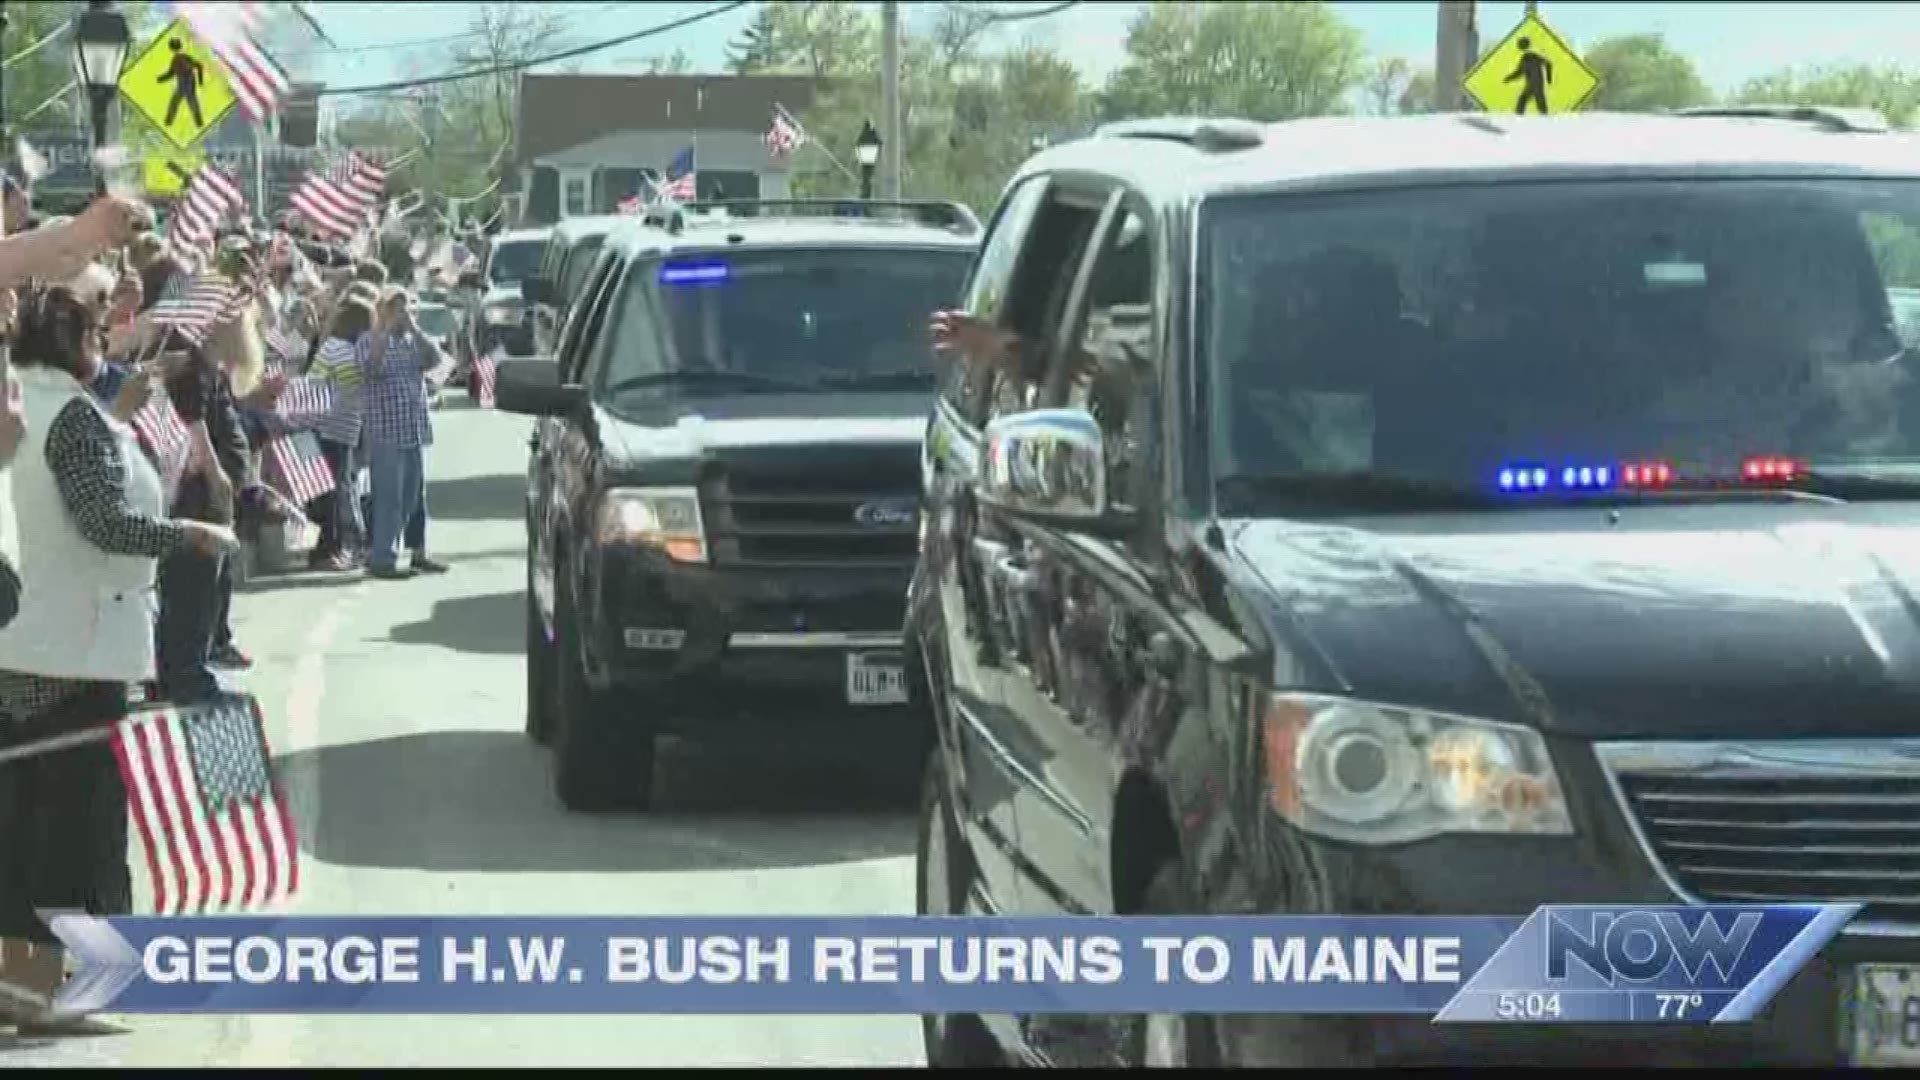 NOW: George H.W. Bush returns to Maine